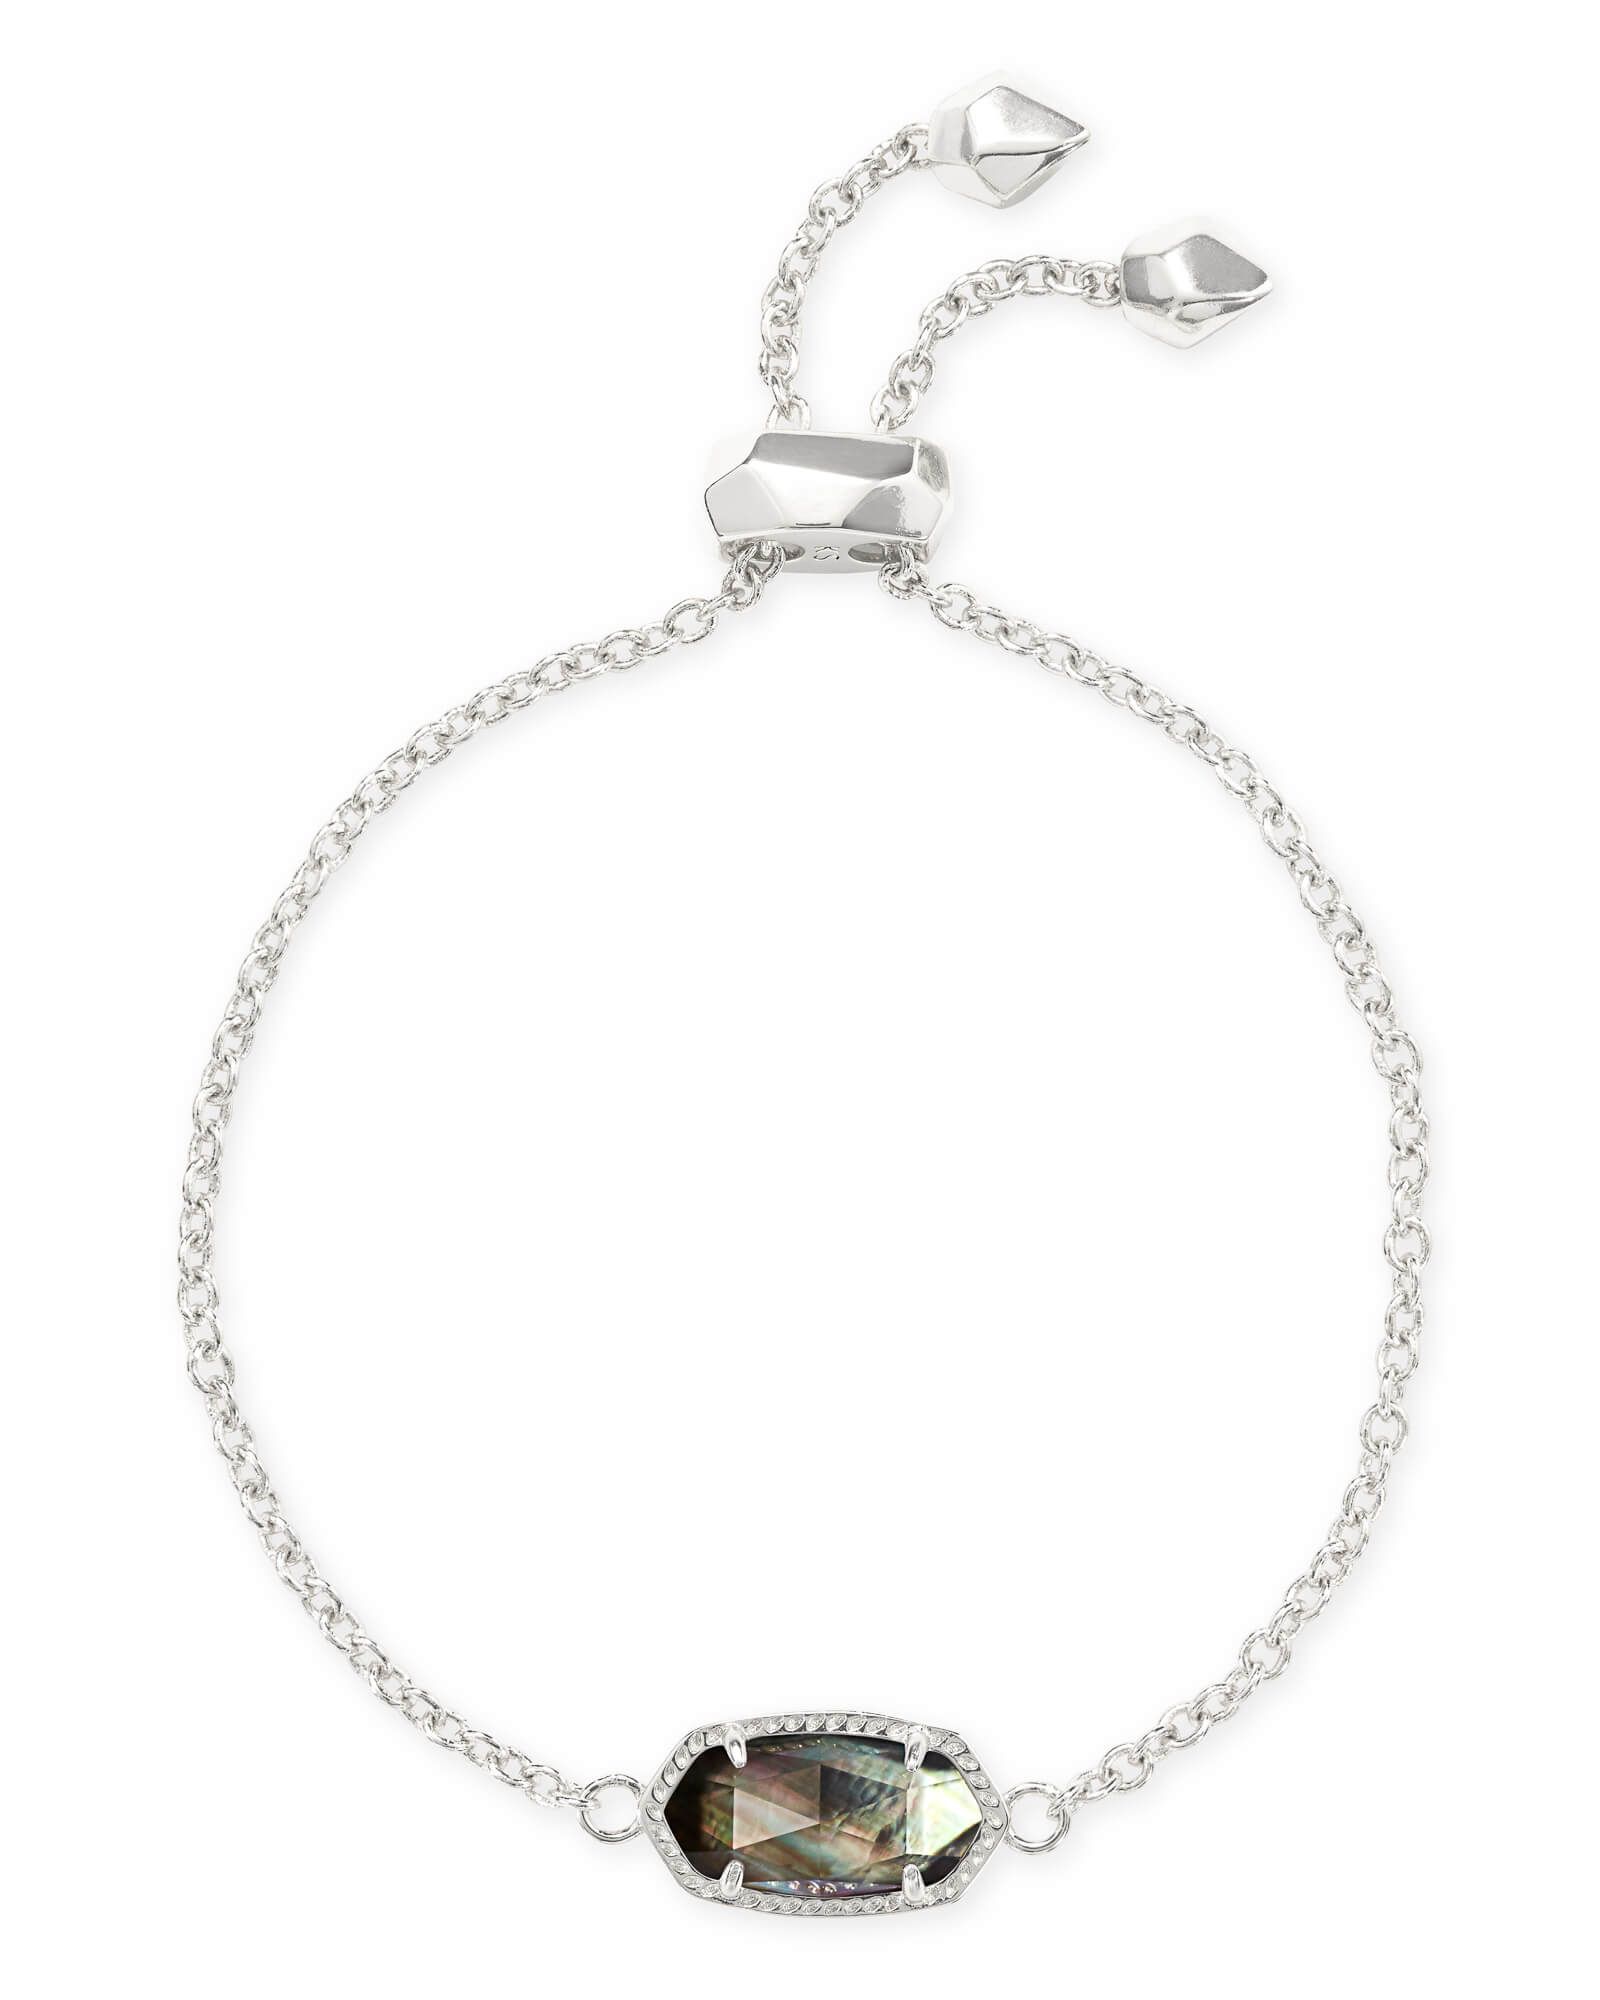 Elaina Bright Silver Adjustable Chain Bracelet in Black Mother-of-Pearl | Kendra Scott | Kendra Scott